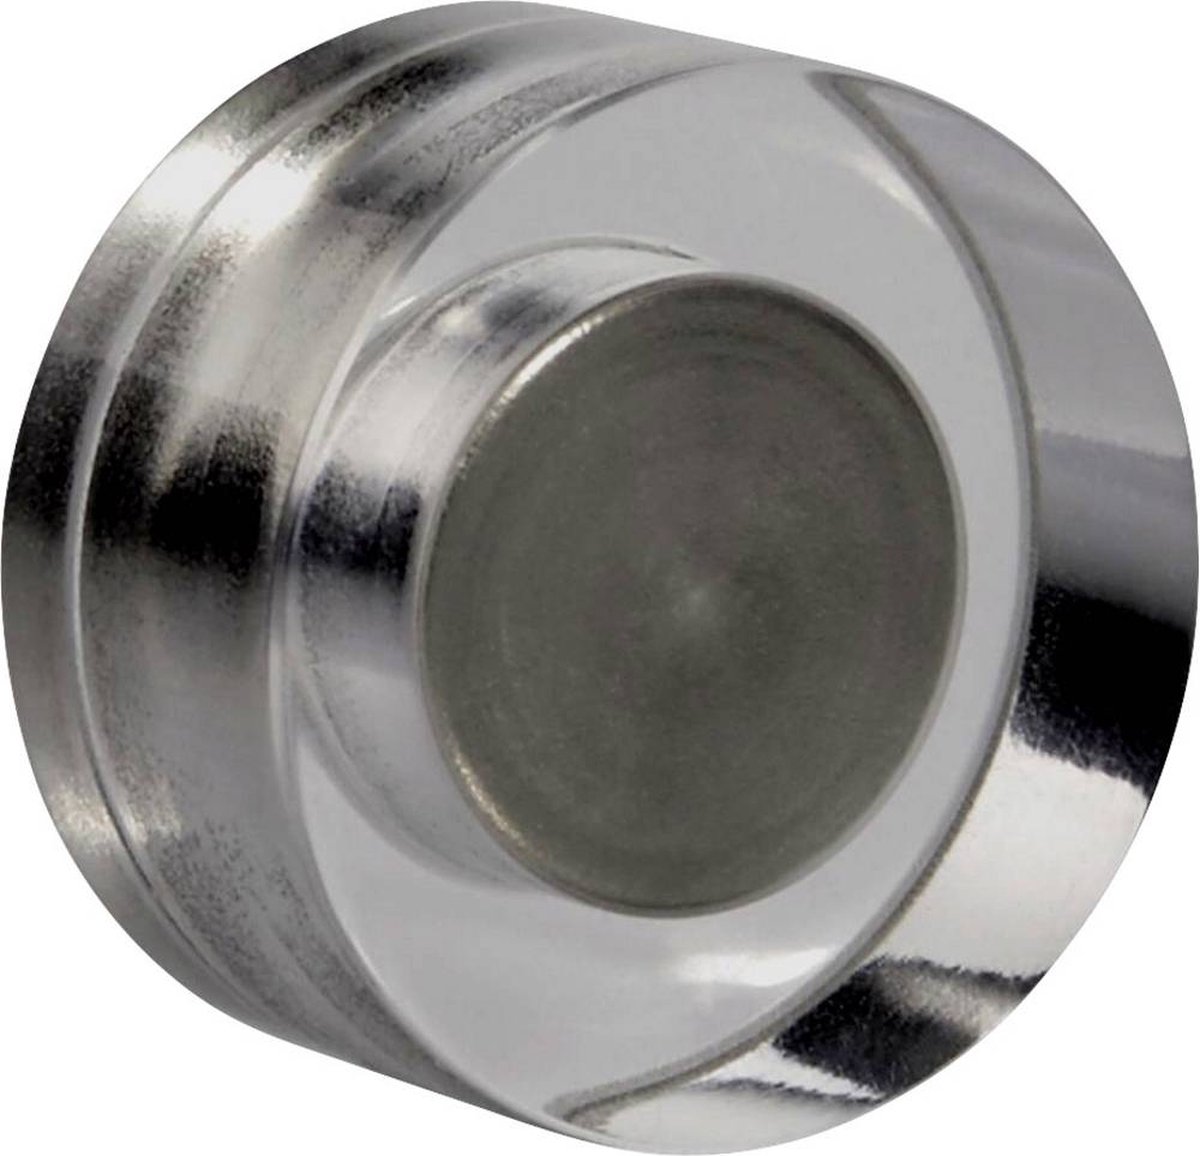 Magnetoplan Magneet Acryl (Ø) 20 mm Transparant 4 stuk(s) 1681020